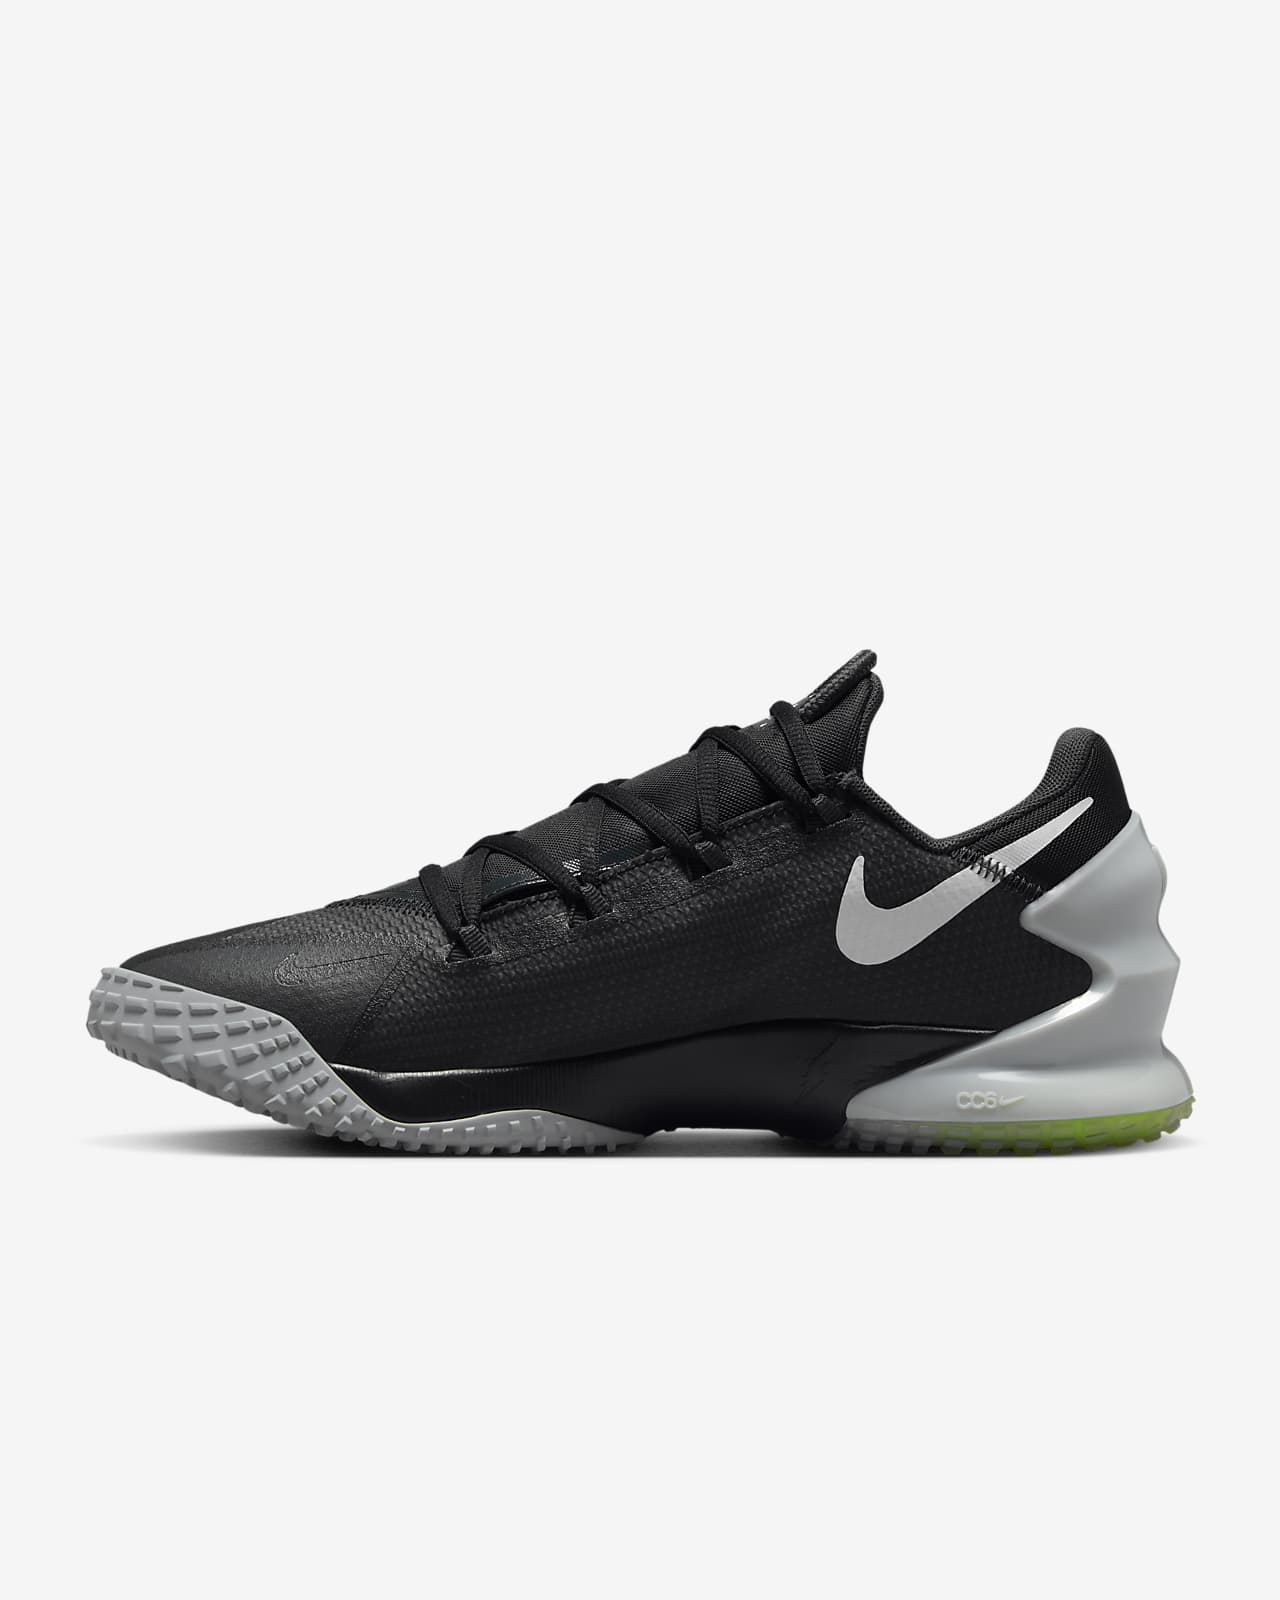 Nike Force Zoom Trout 7 TF Light Smoke Baseball Turf Shoes CQ7225-002 Size  7 